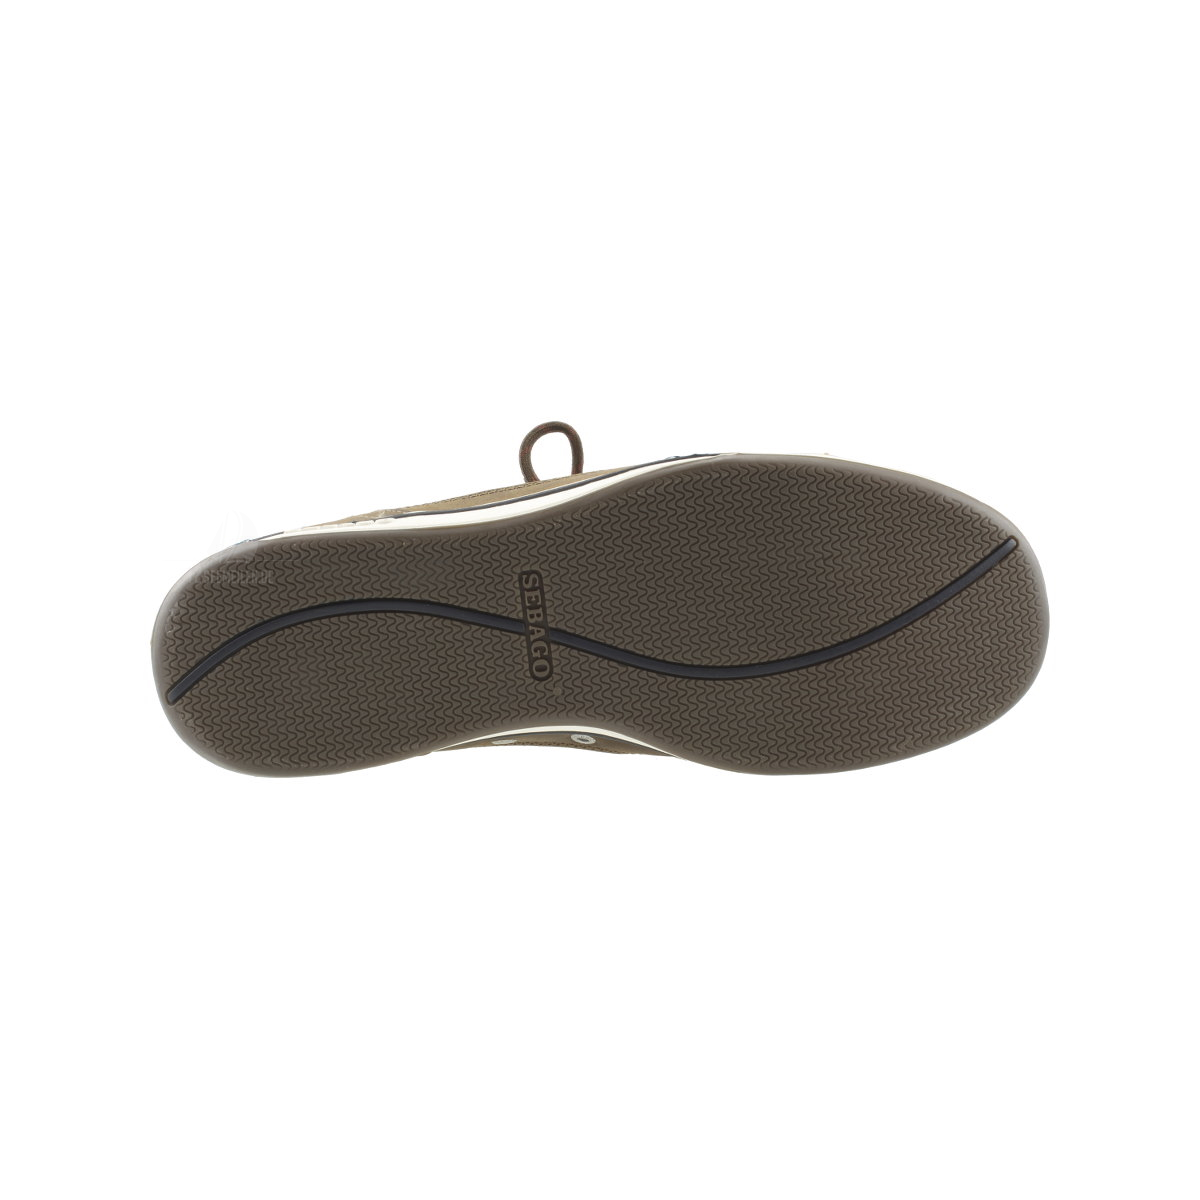 Sebago Triton Three-Eye chaussures bateau homme walnut leather, taille EU 44,5 (US 10,5)